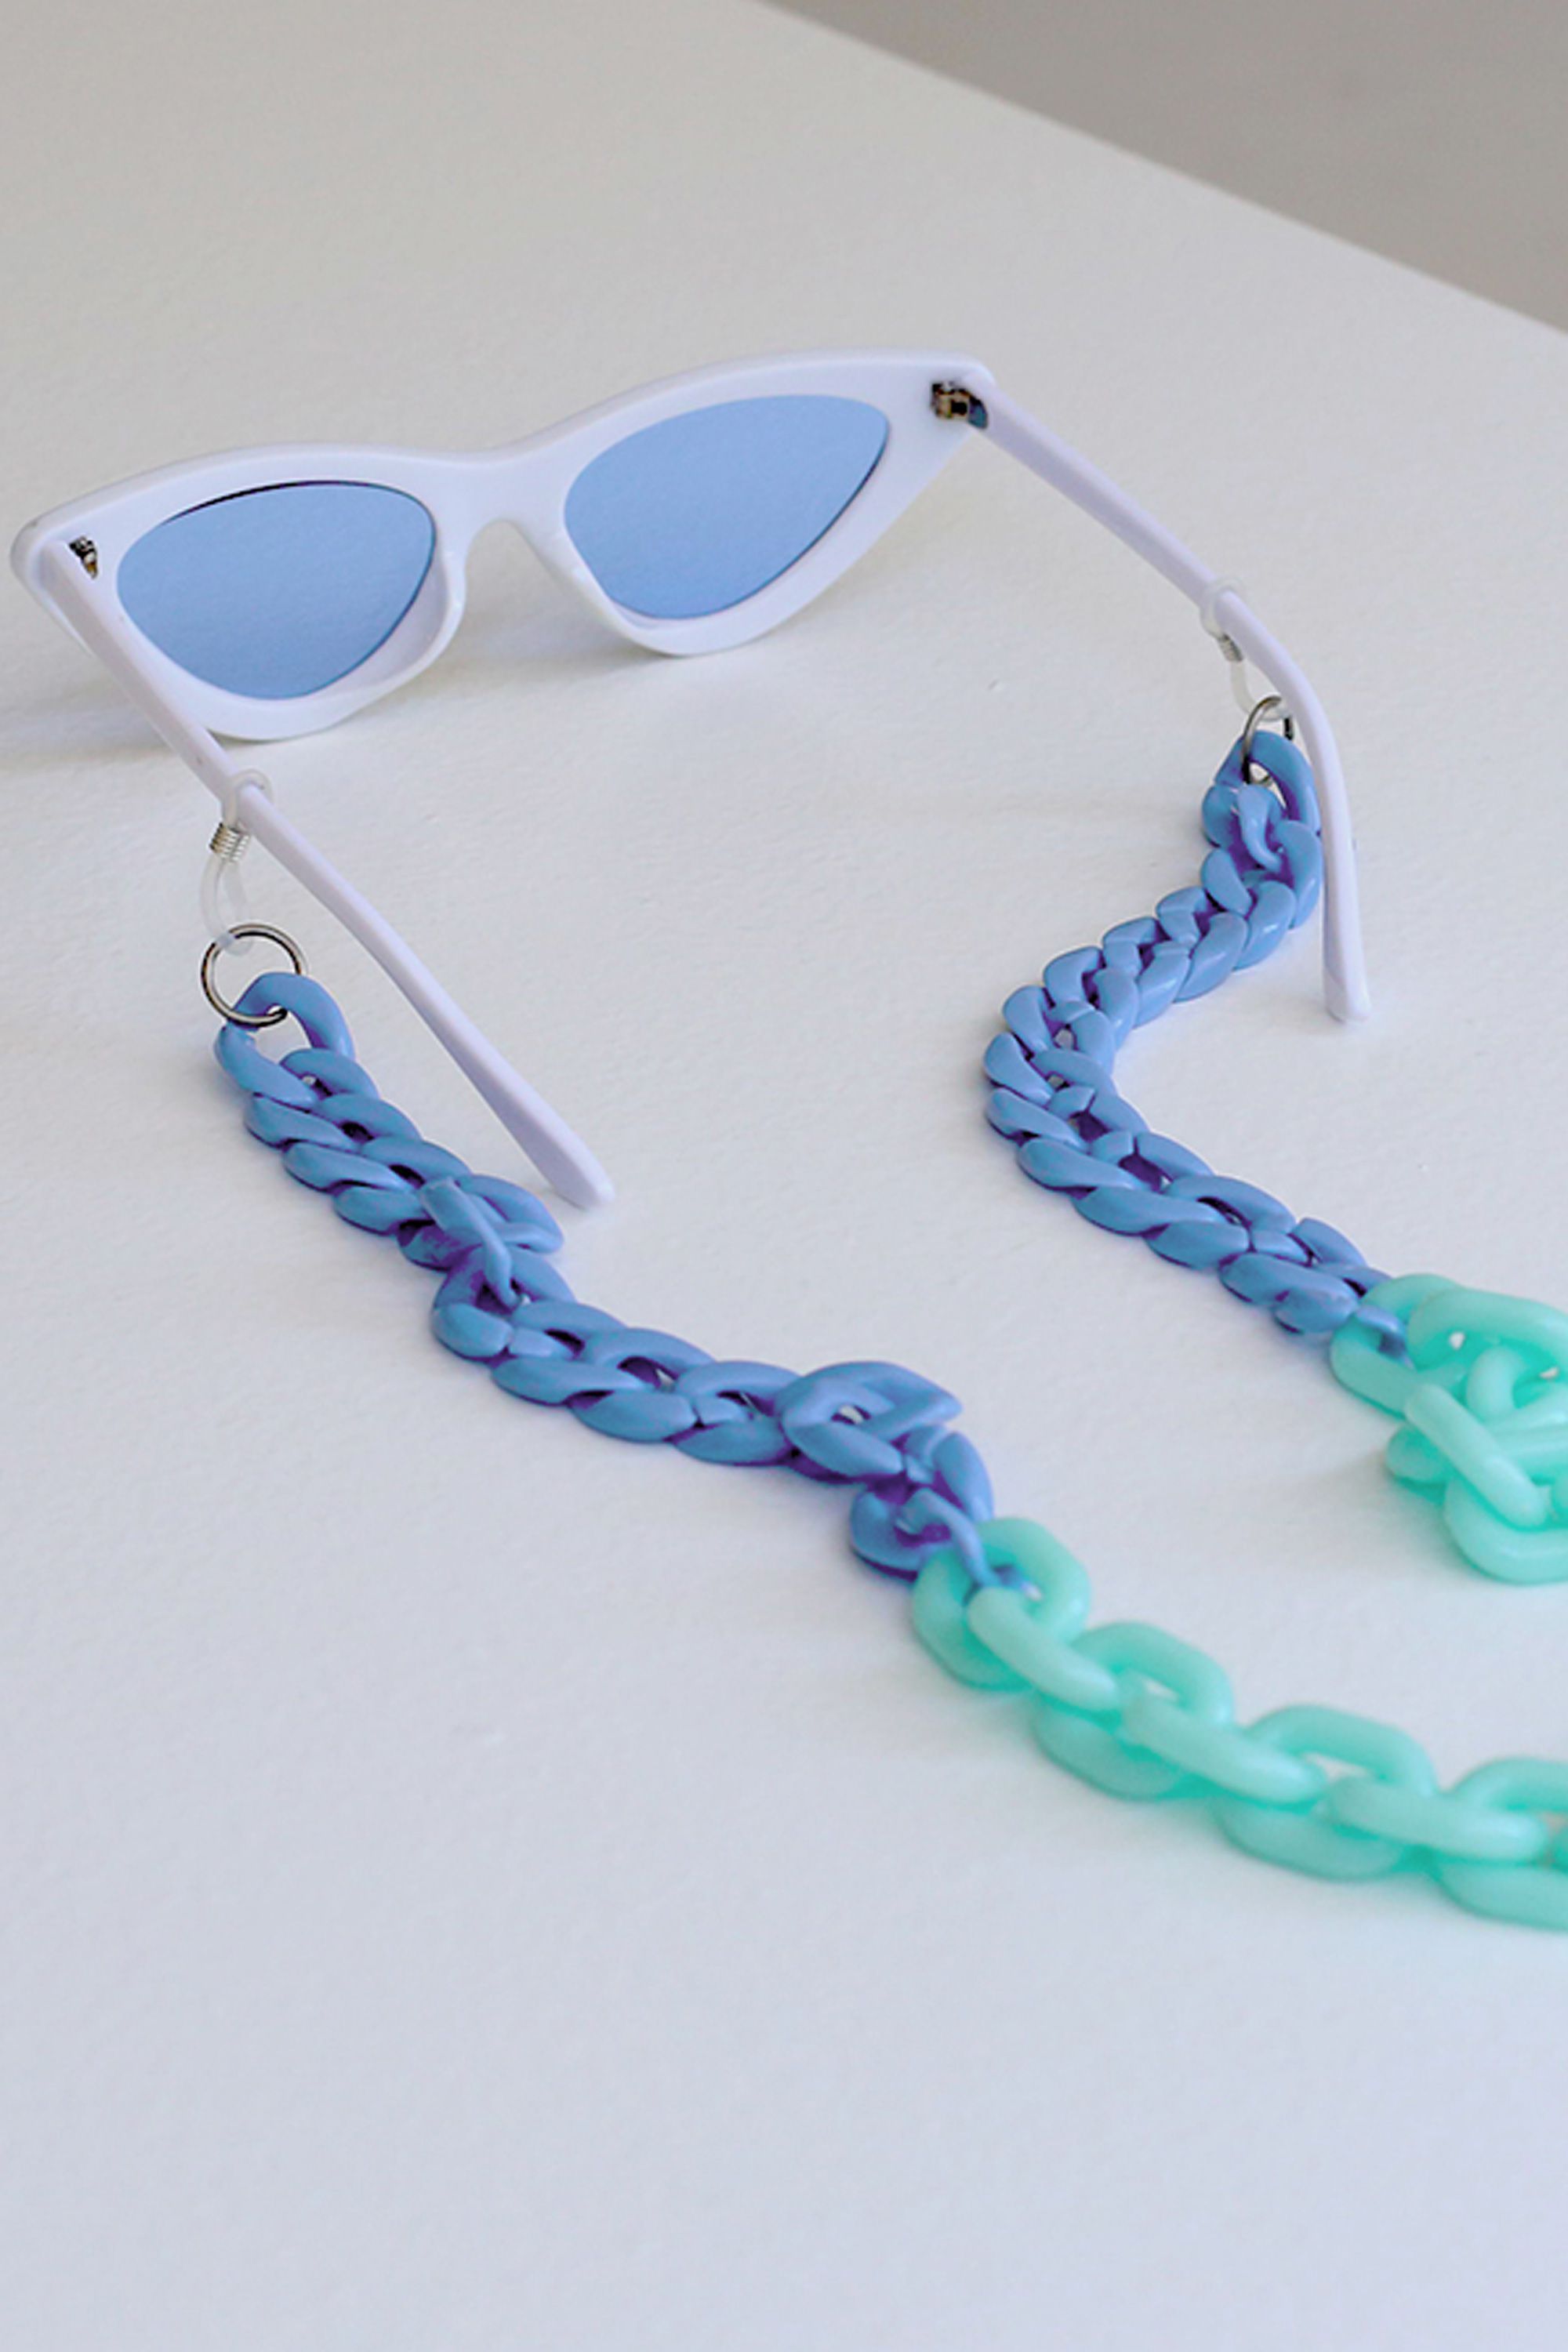 Fashion Sun glasses Chain holder For Women Vintage Sunglasses neck Chain Men Met